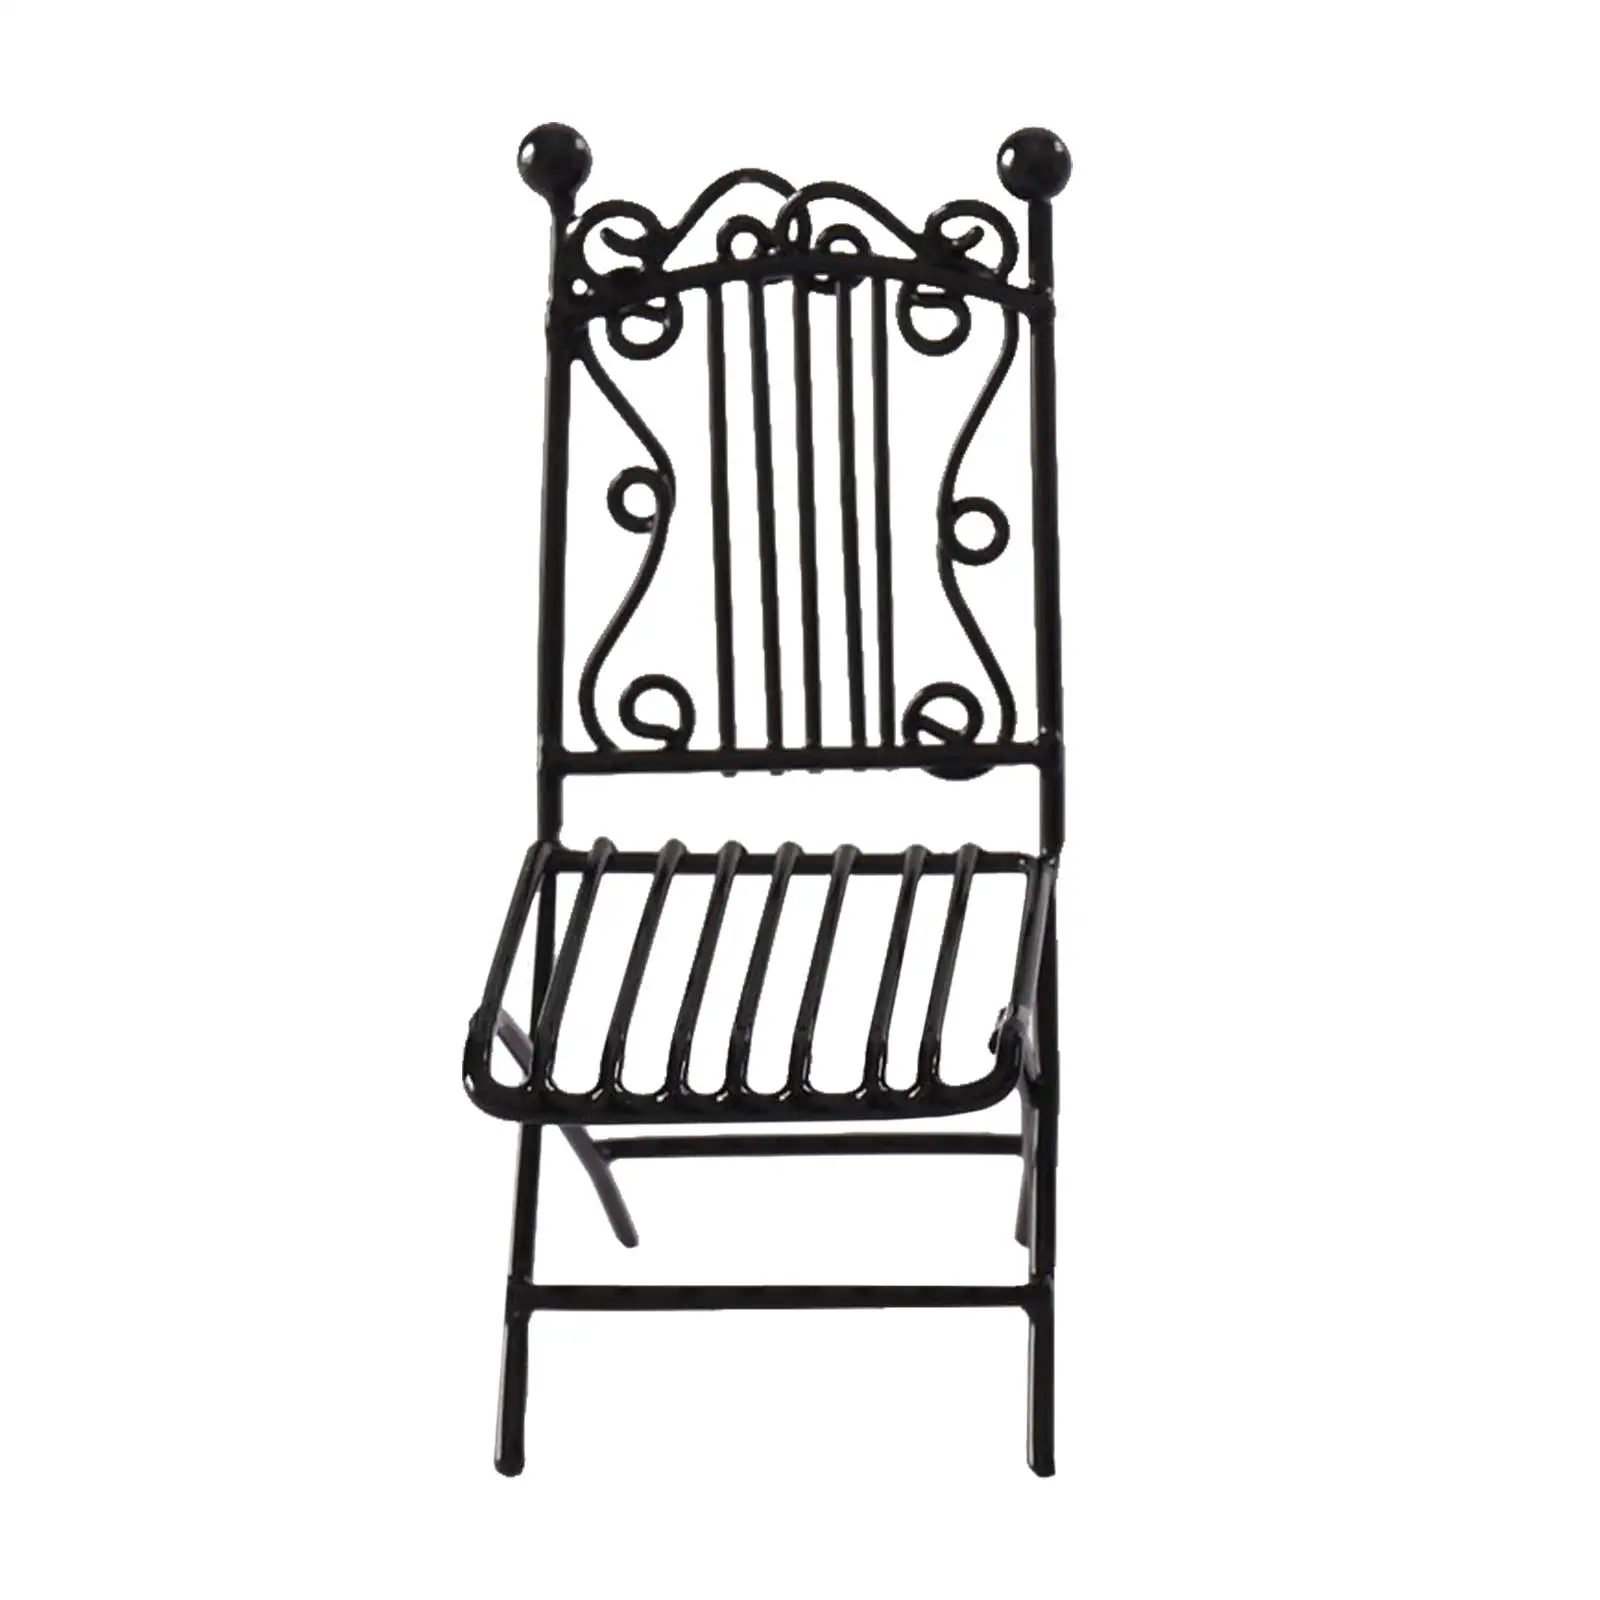 1:12 Dollhouse Table Chair Rustic Elegant DIY Scene Crafts